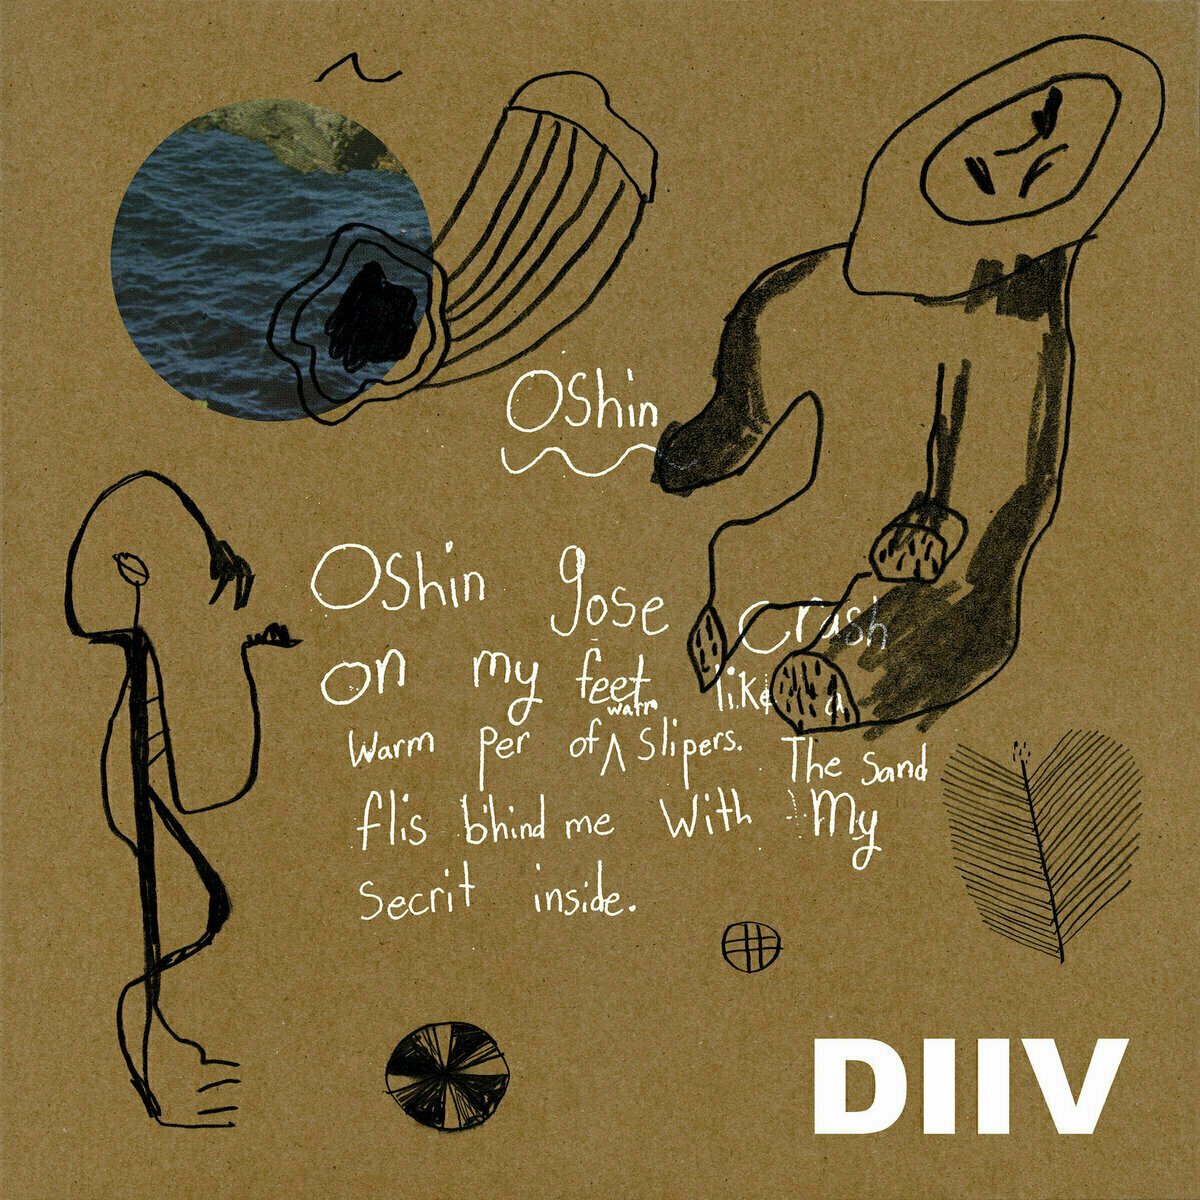 Vinyl Record Diiv - Oshin - 10th Anniversary (Reissue) (Blue Vinyl) (2 LP)